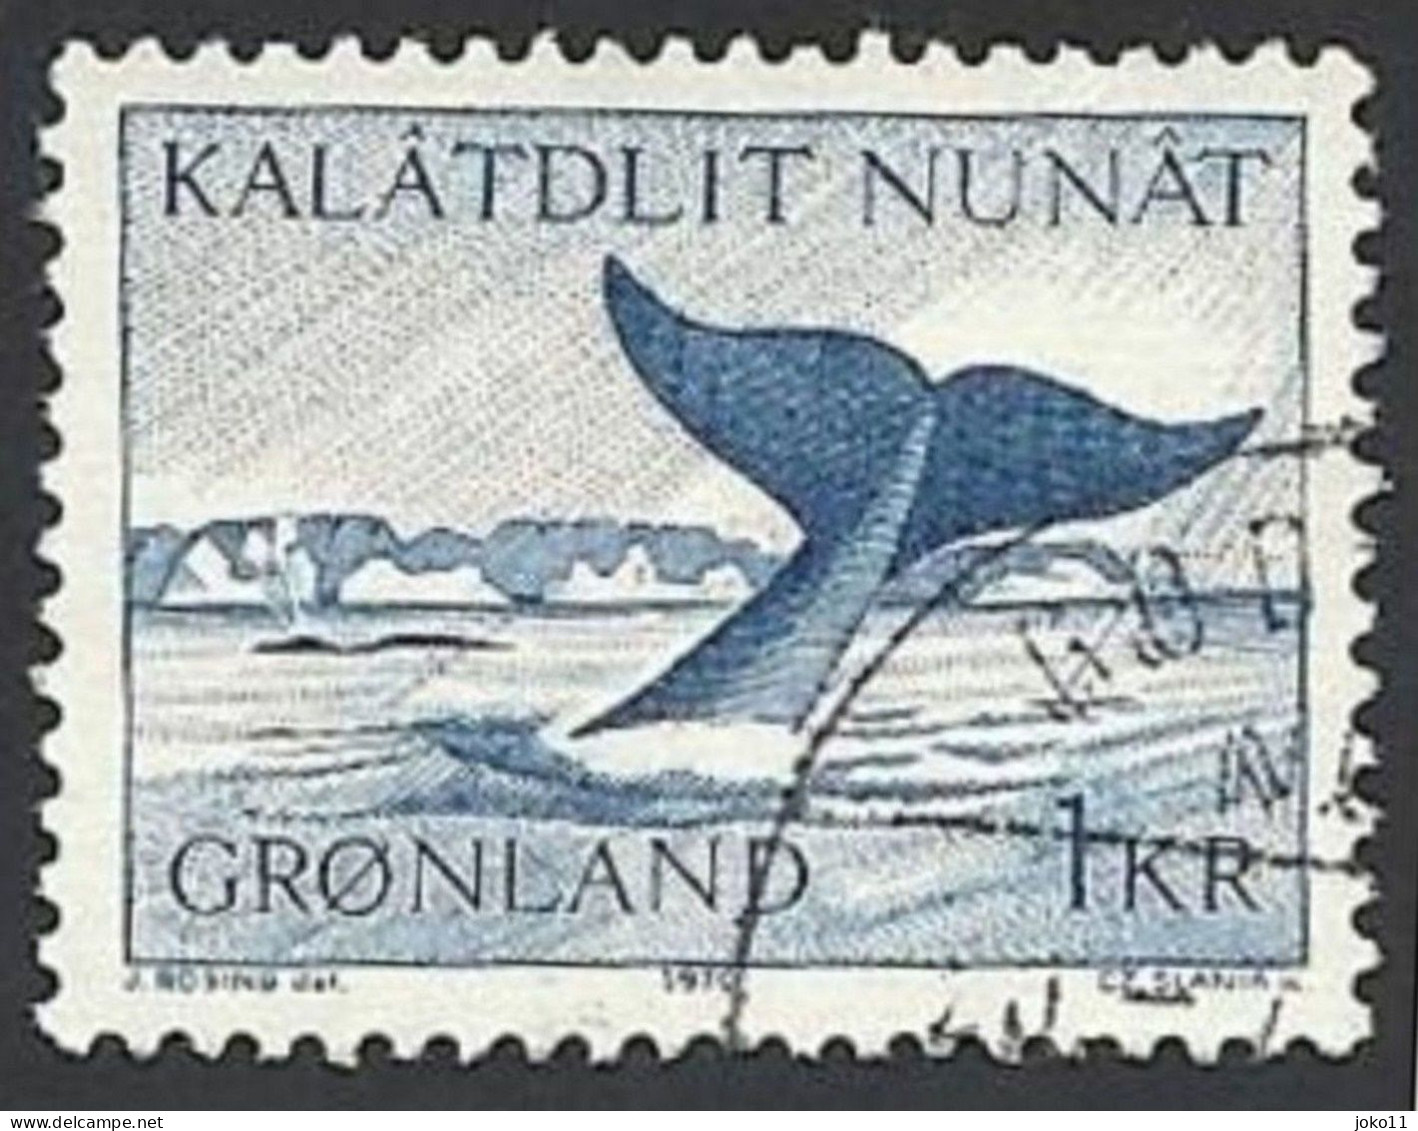 Grönland, 1970, Mi.-Nr. 75, Gestempelt - Oblitérés